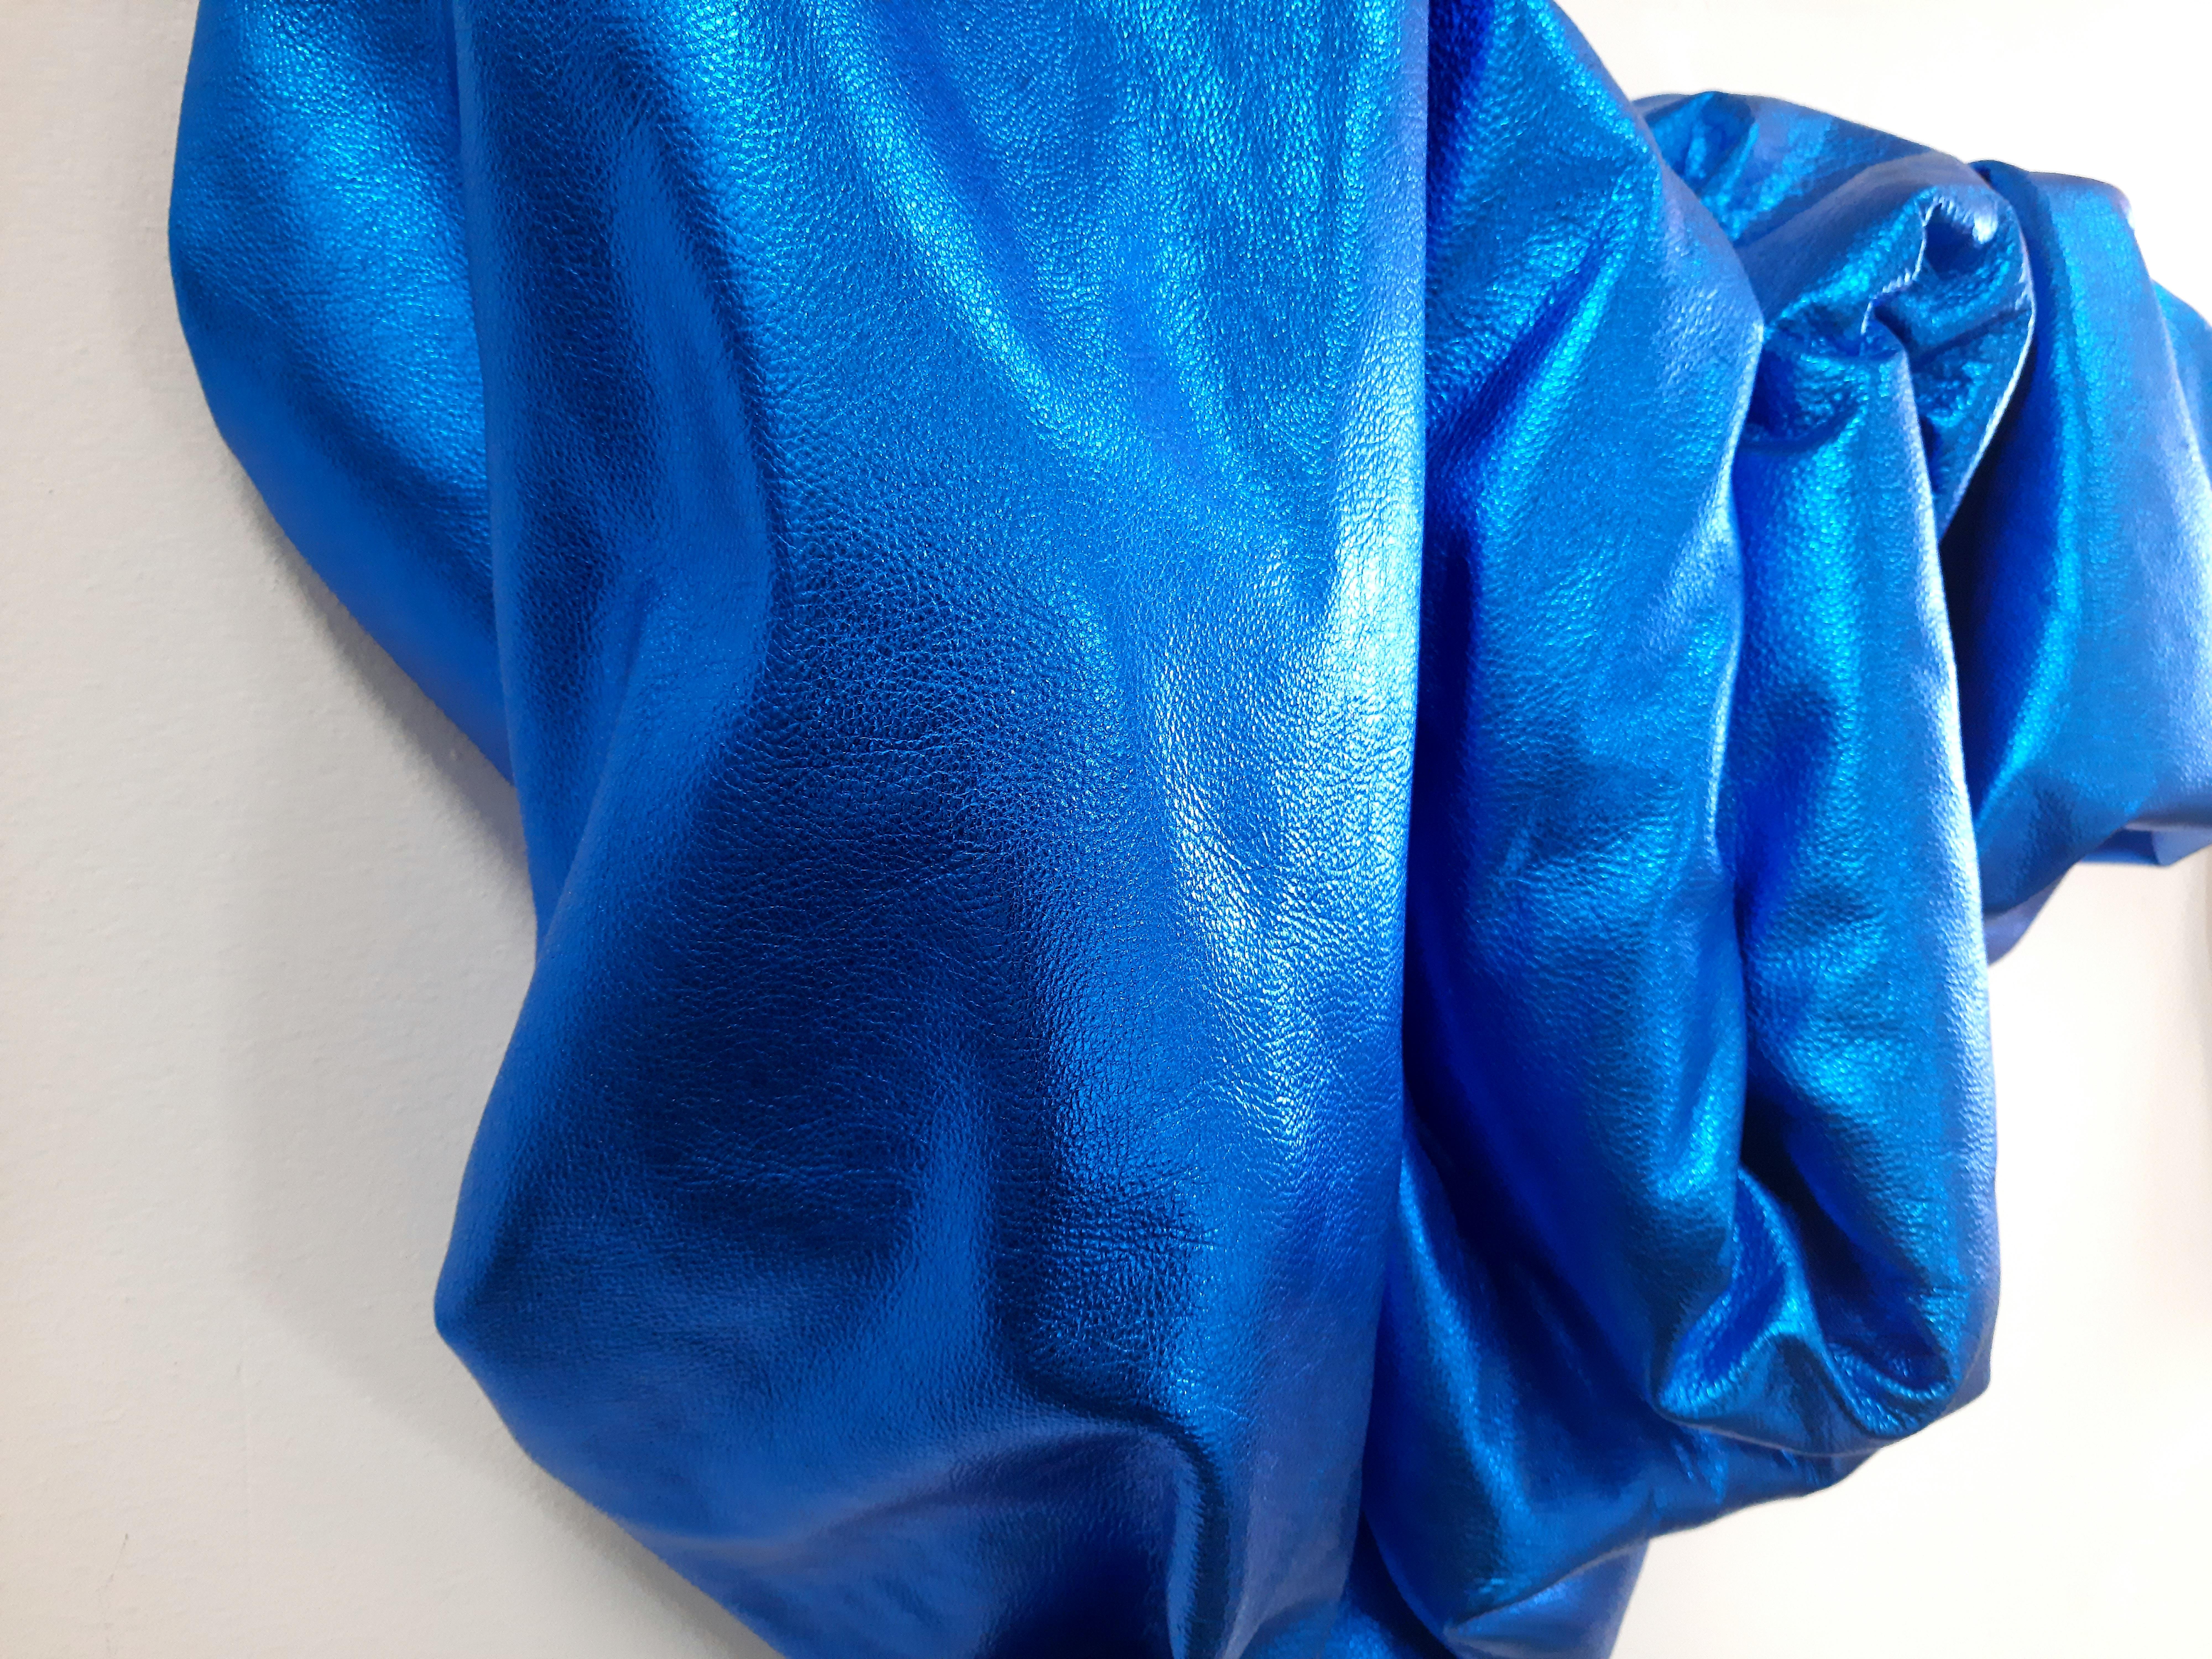 Blau 107 (folds pop slick metallic smooth leather wall sculpture art) im Angebot 1